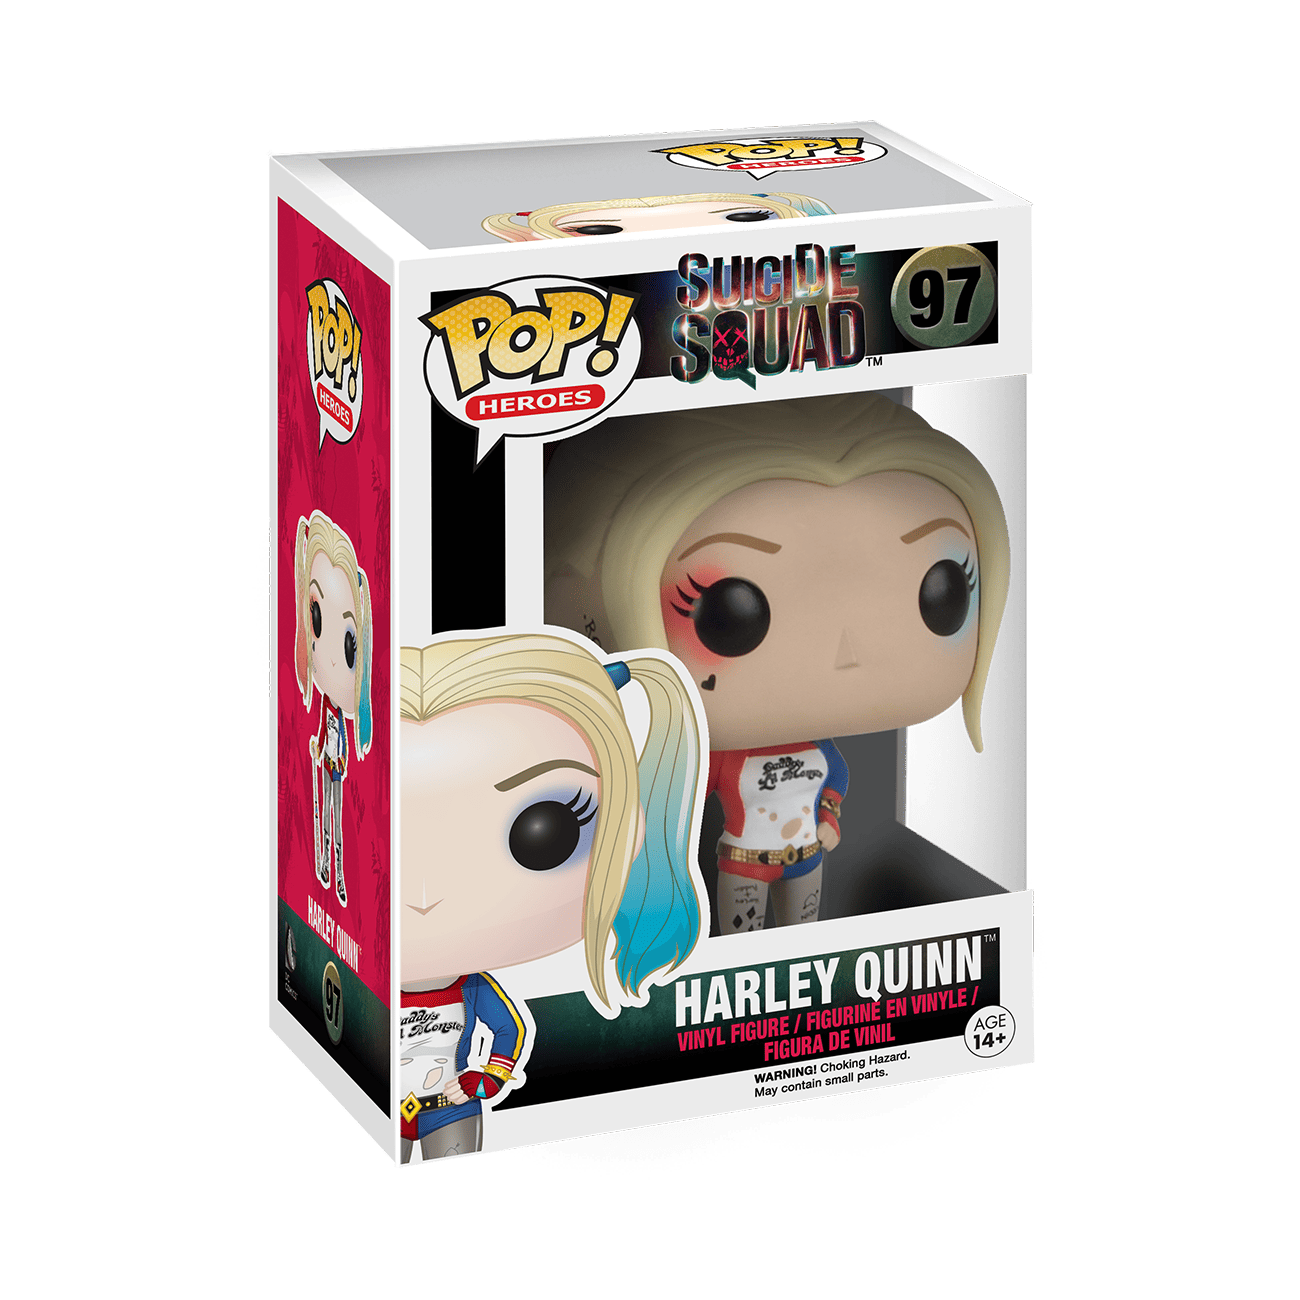 Buy Pop! Harley Quinn at Funko.